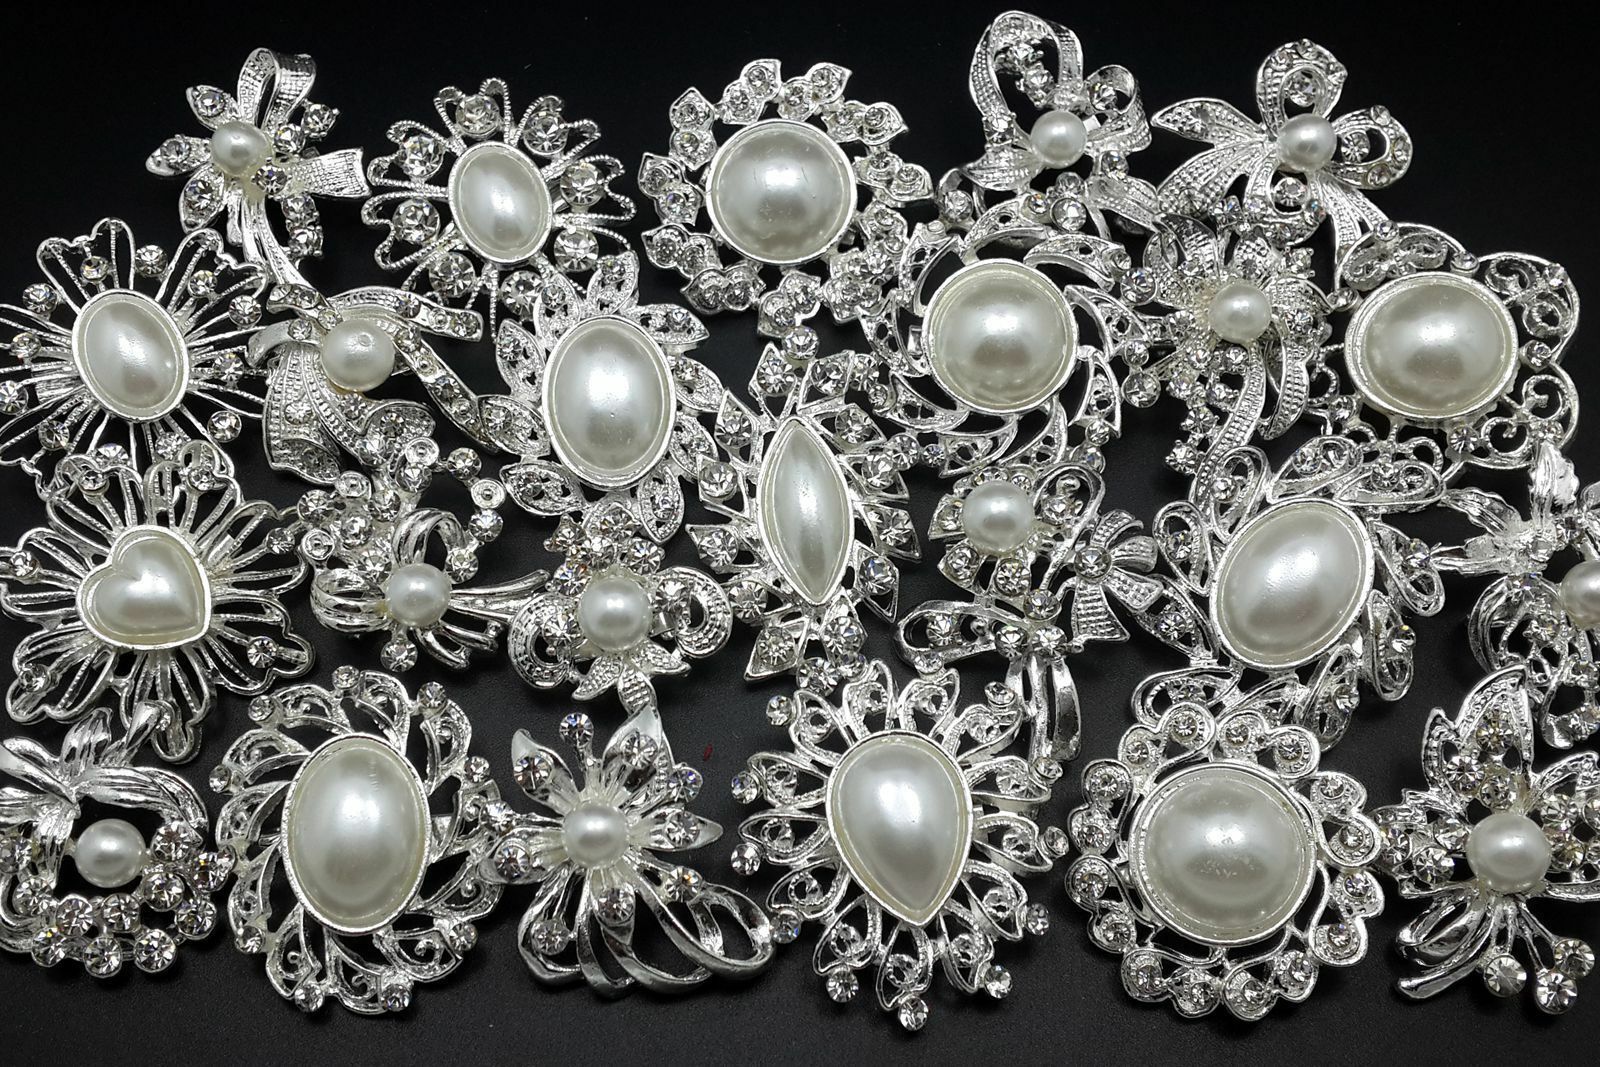 Lot 24 Pcs Mixed Silver White Pearl Rhinestone Crystal Brooch Pin Diy Bouquet